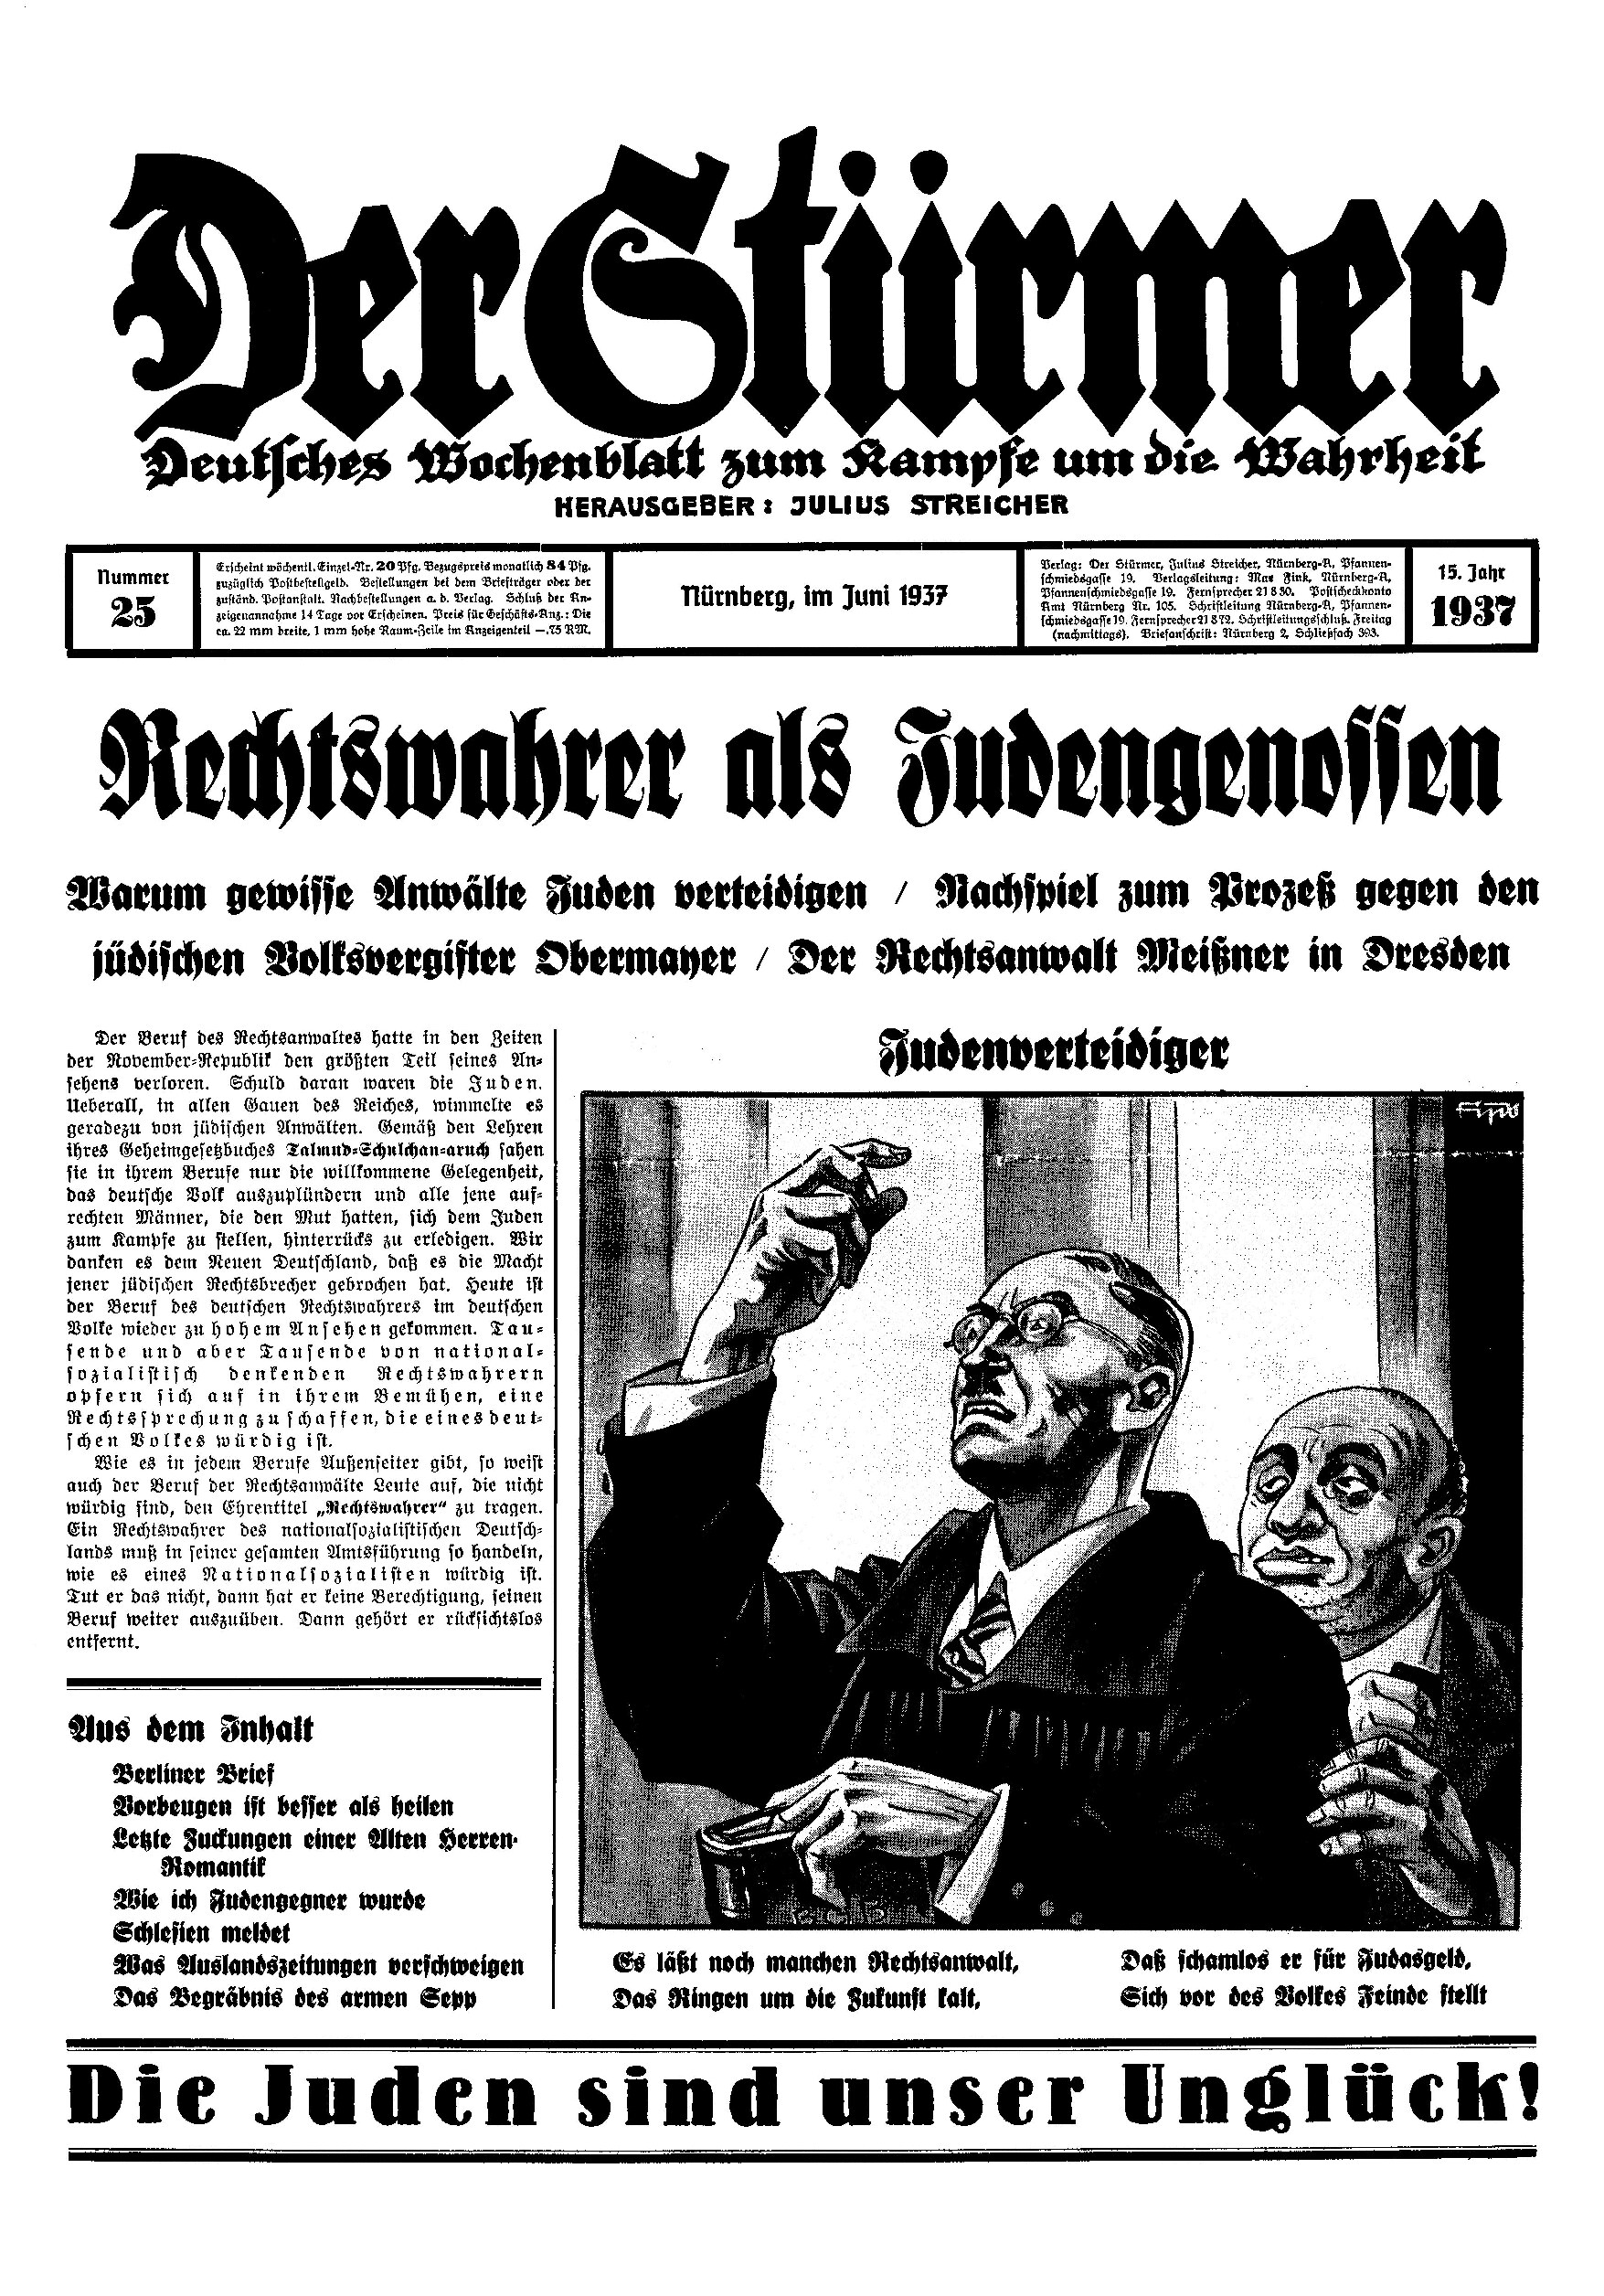 Der Stürmer - 1937 Nr. 25 - Rechtswahrer als Judengenossen